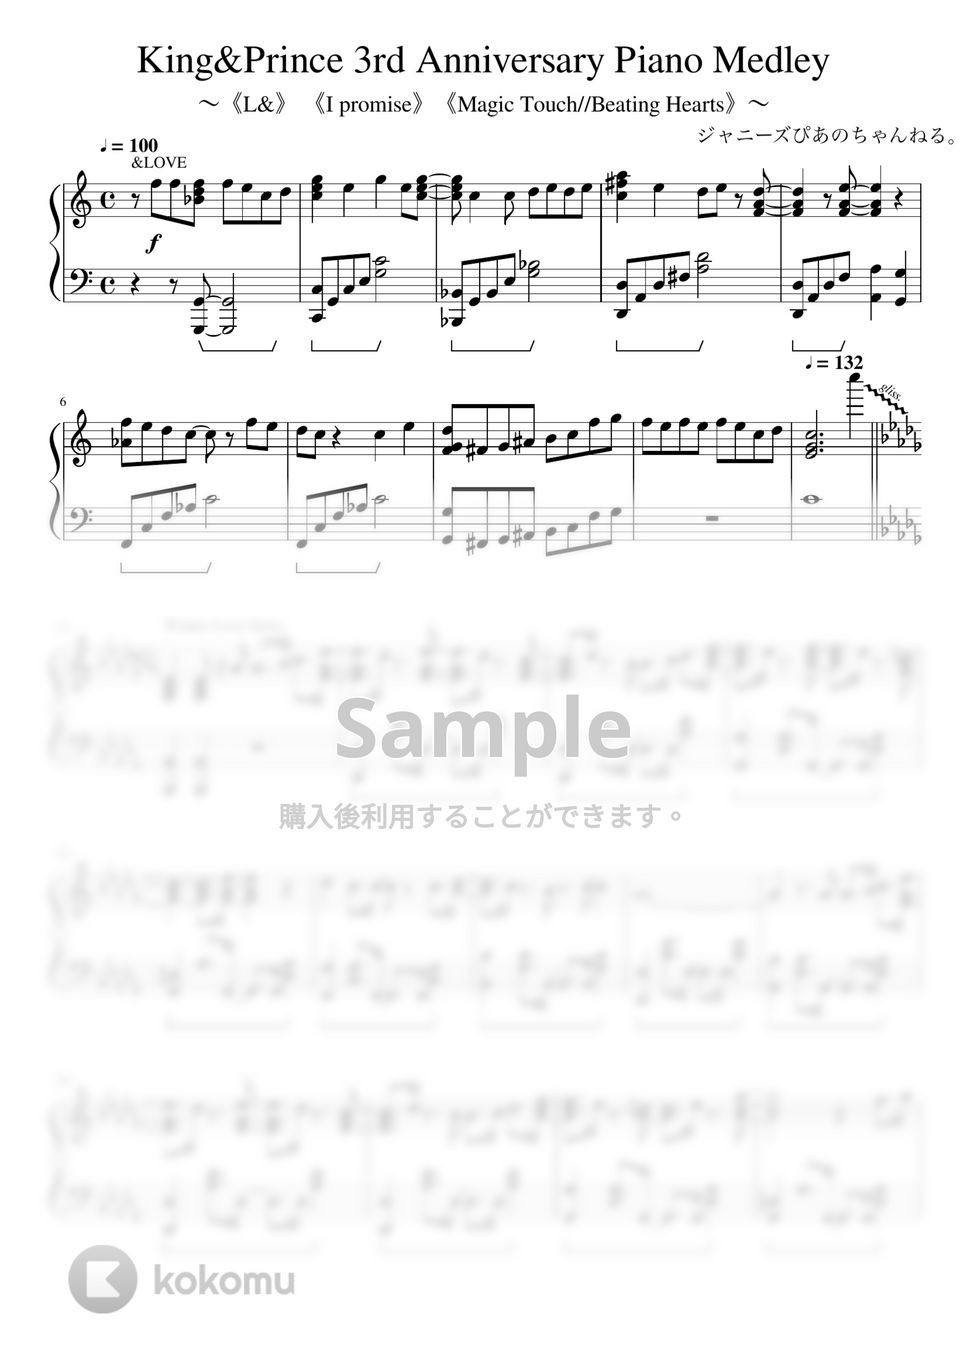 King&Prince - King&Prince 3rd Anniversary Piano Medley〜『L&]』,『I promise』,『Magic Touch//Beating Hearts』収録曲より〜 (ピアノソロ / アイドル / ジャニーズ) by ジャニーズぴあのちゃんねる。